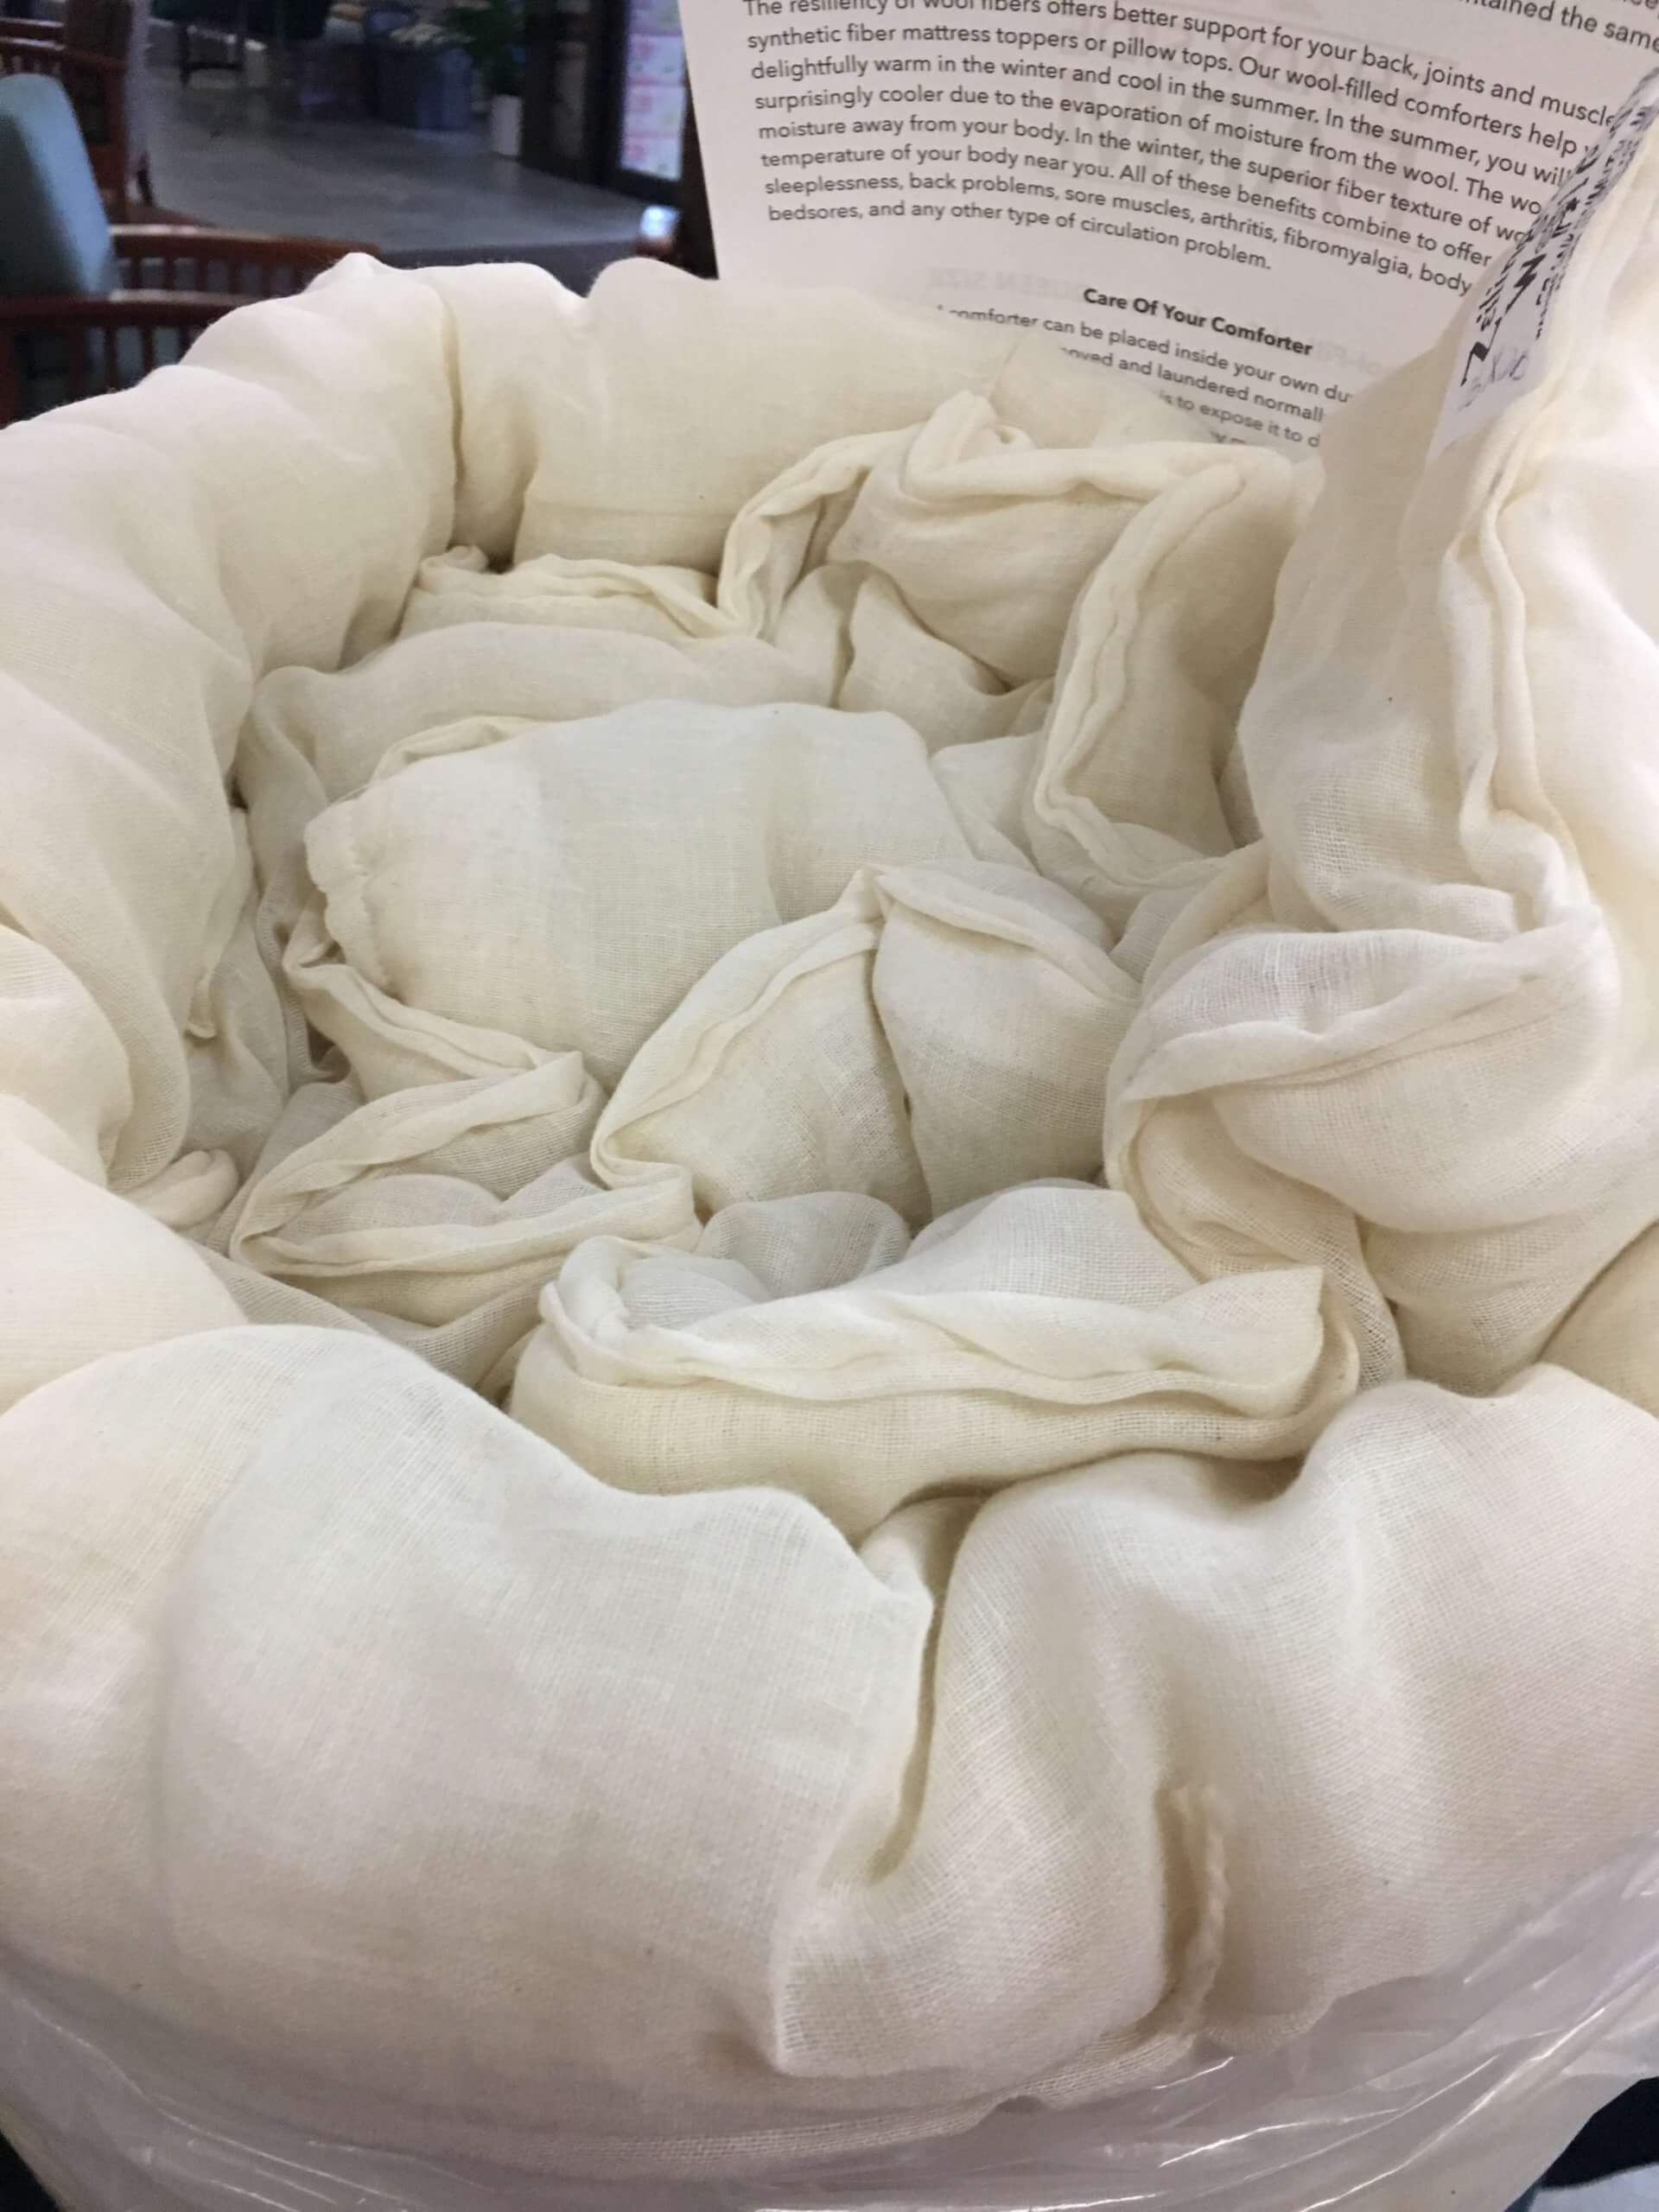 Wool-filled comforter